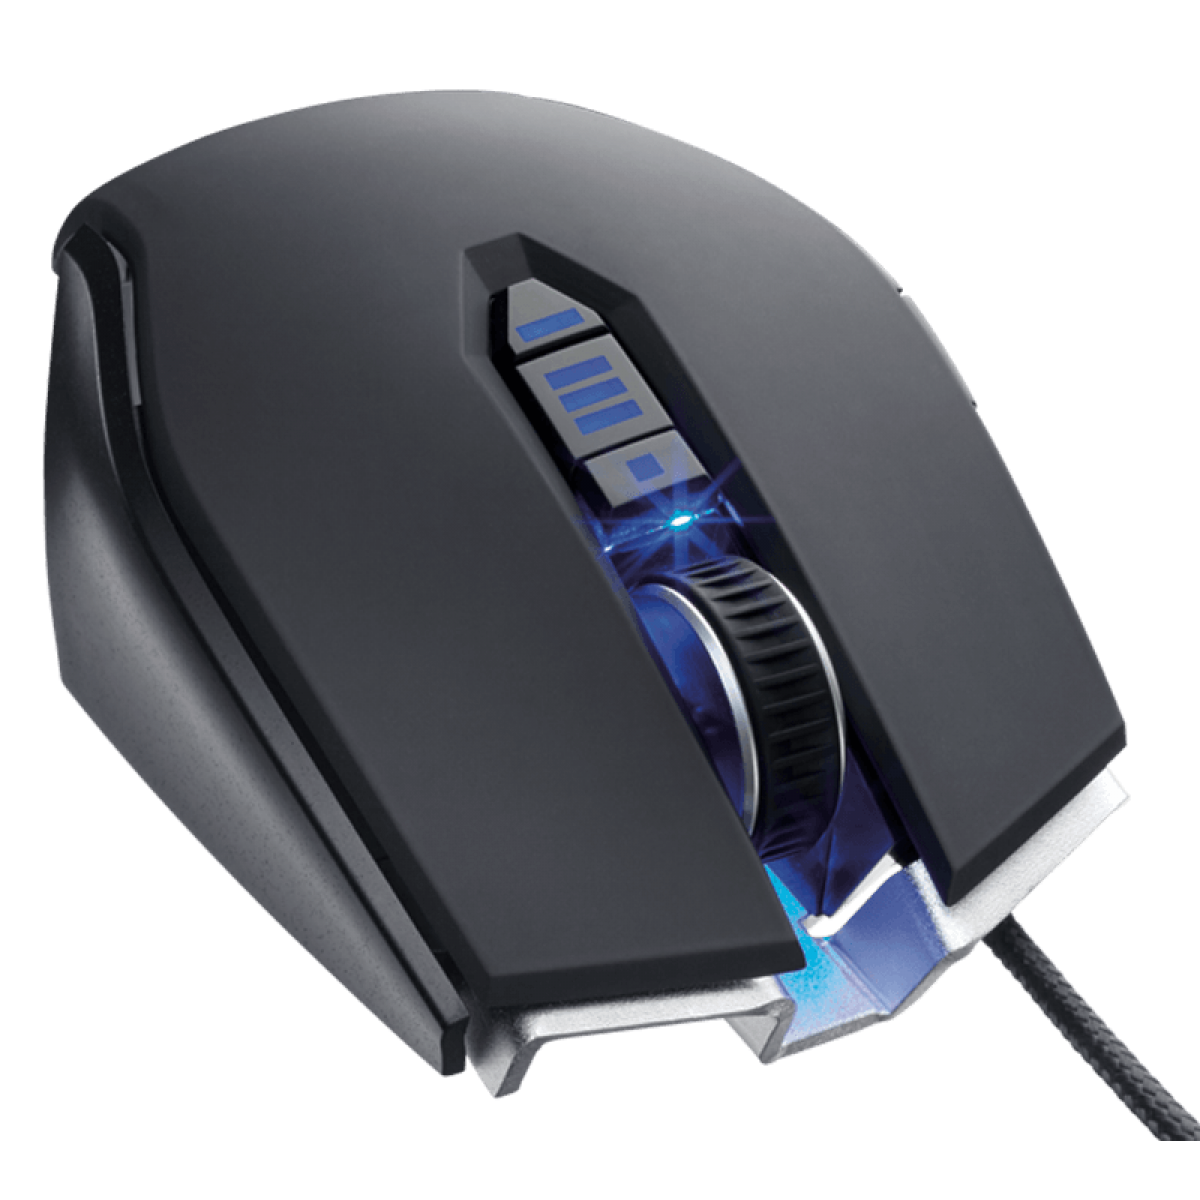 Mouse Corsair Vengeance M65 FPS Laser Gaming Mouse 8200dpi  - USB